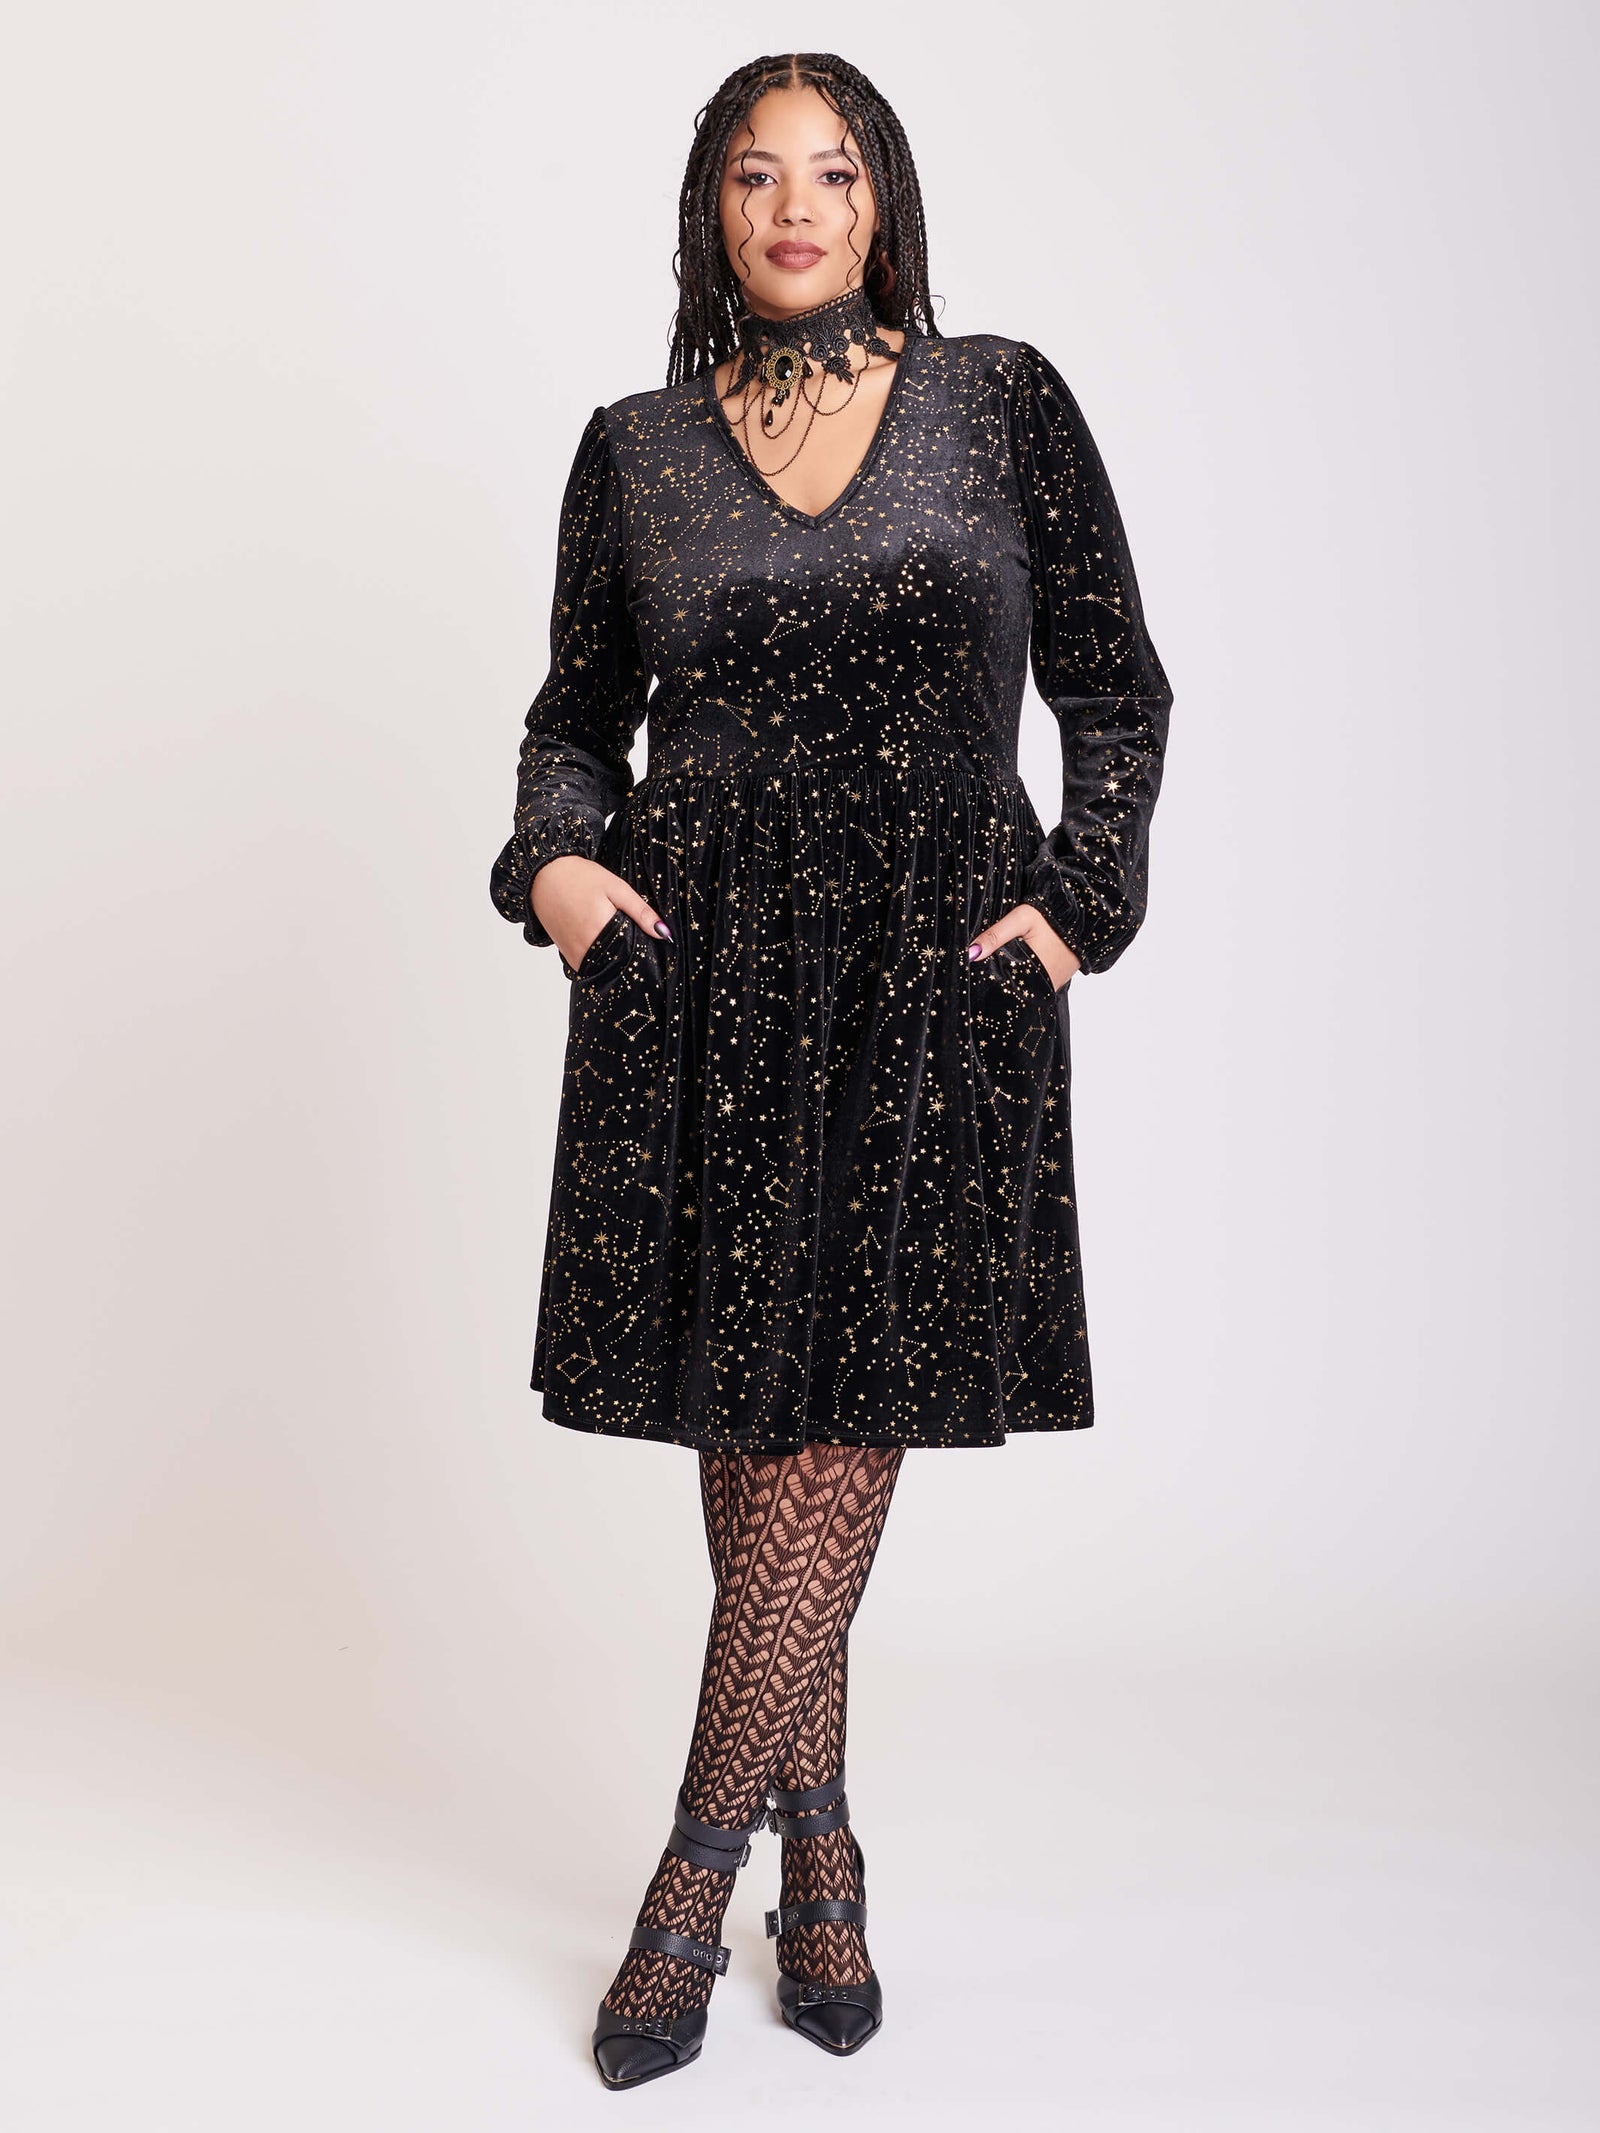 Torrid Woman's Plus Size LBD Super Soft & Lace Yoke Black Midi